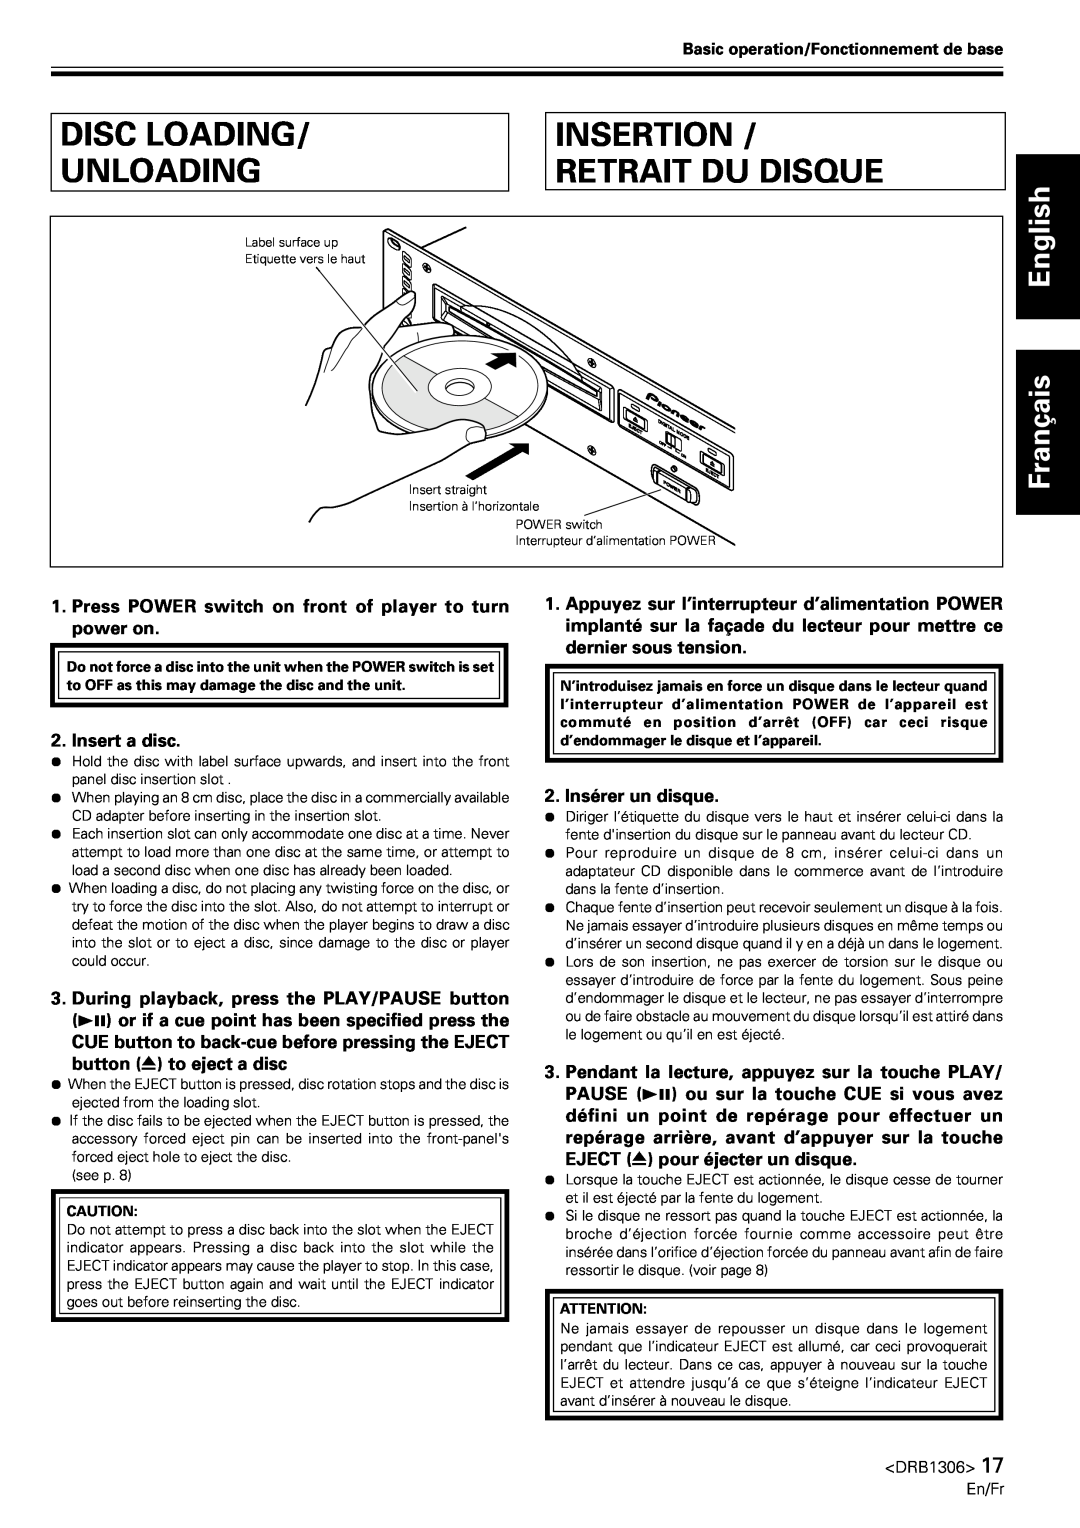 Pioneer CMX-3000 operating instructions Disc Loading, Insertion, Unloading, Retrait Du Disque, English Français 